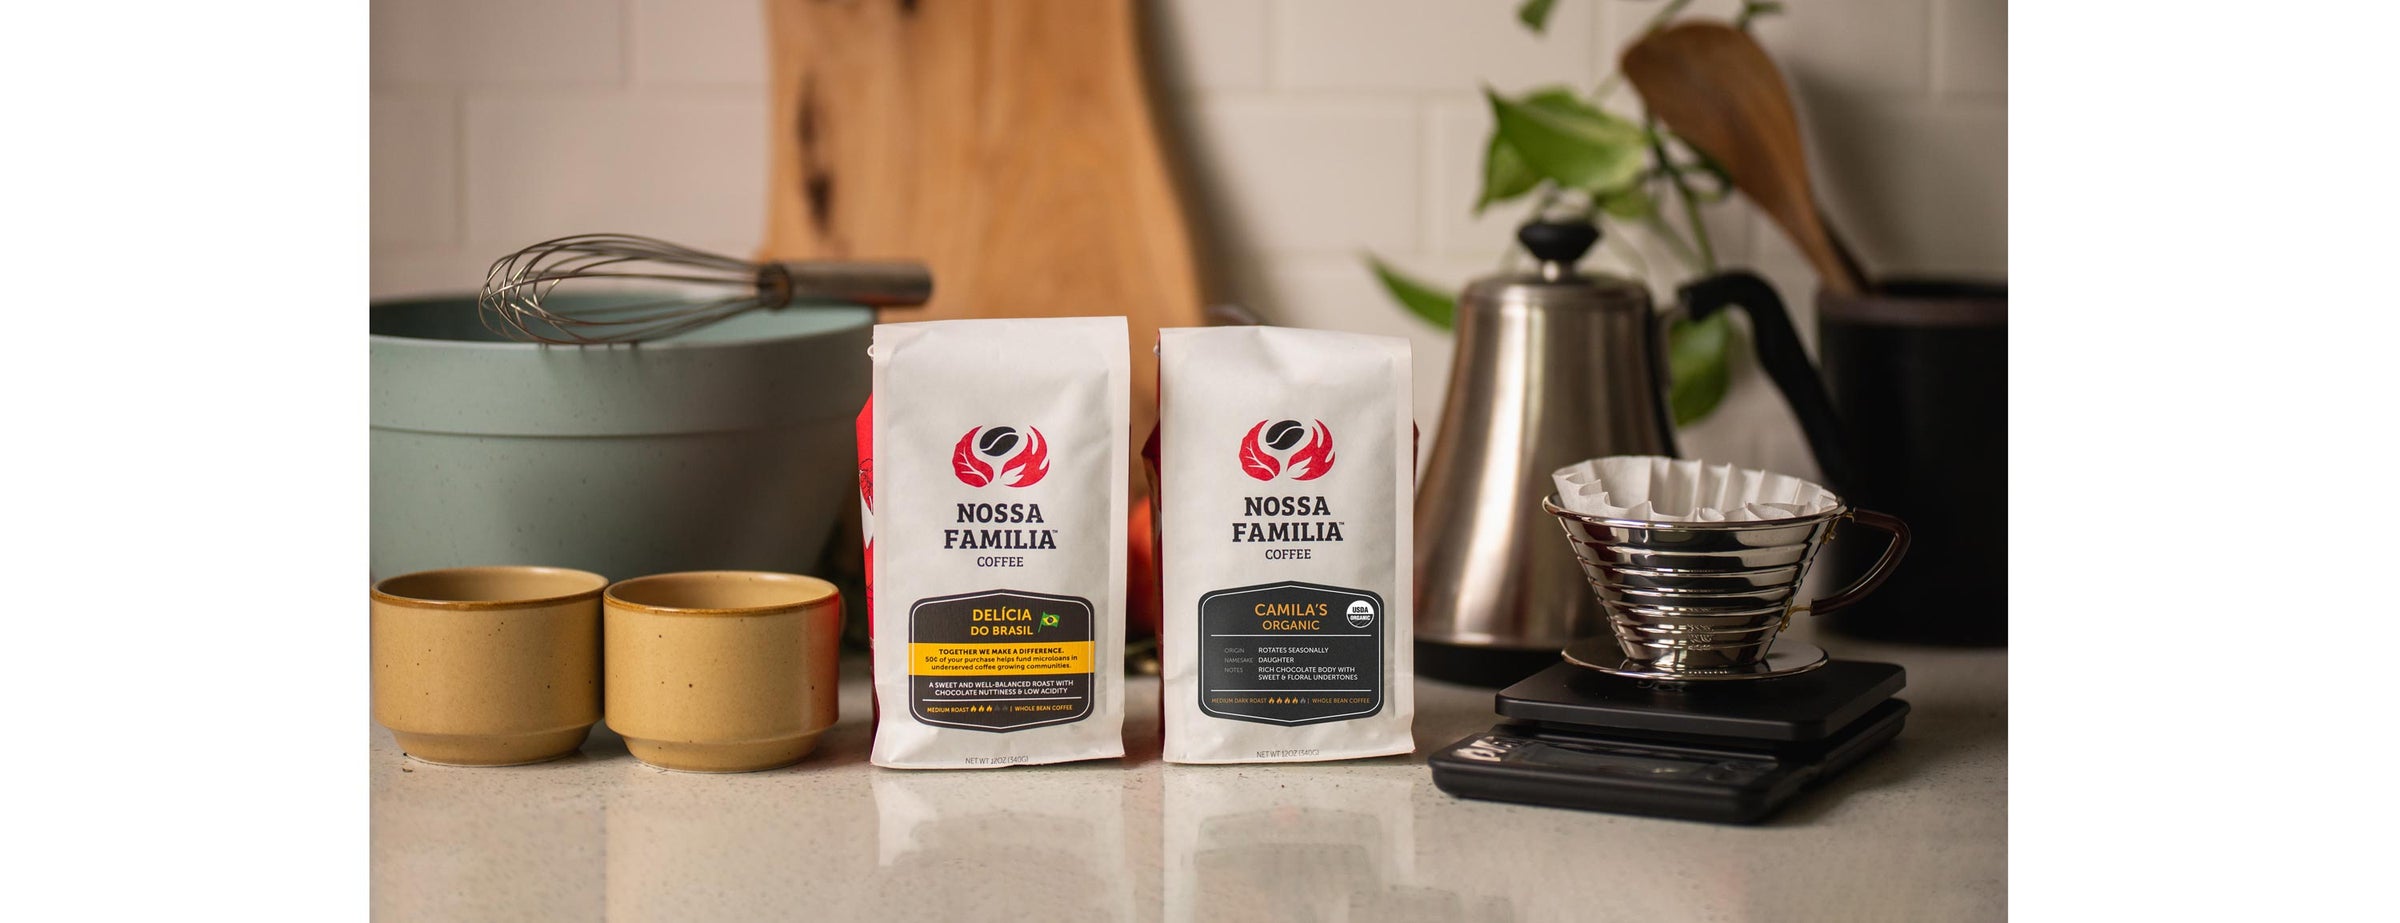 Nossa Familia Coffee Home Brewing Equipment